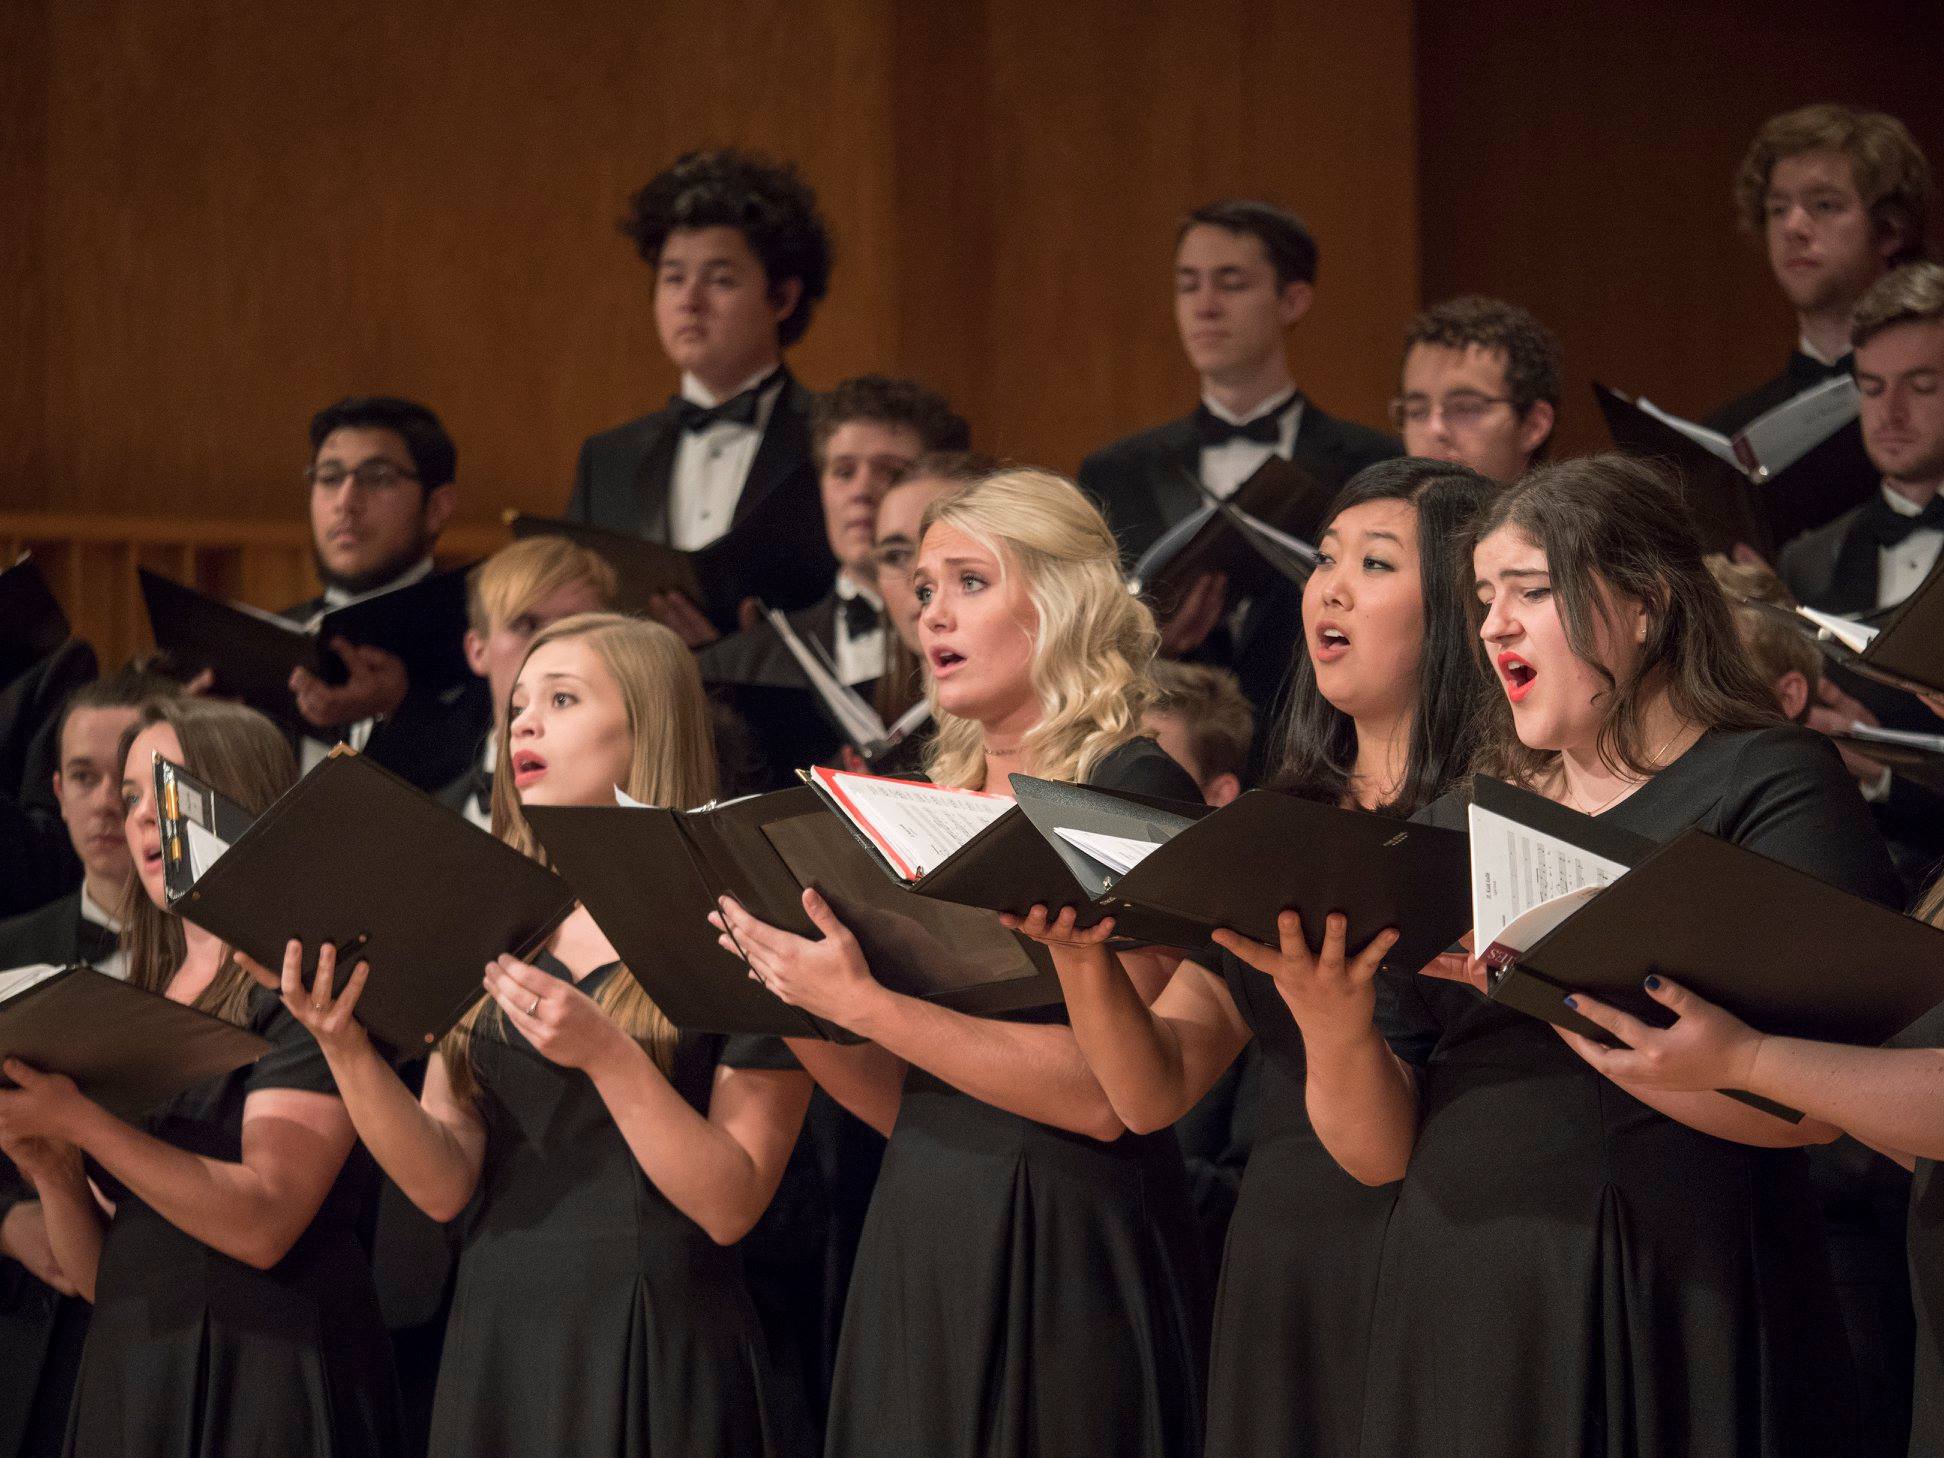 Musicians participate in a choir performance at CU Boulder